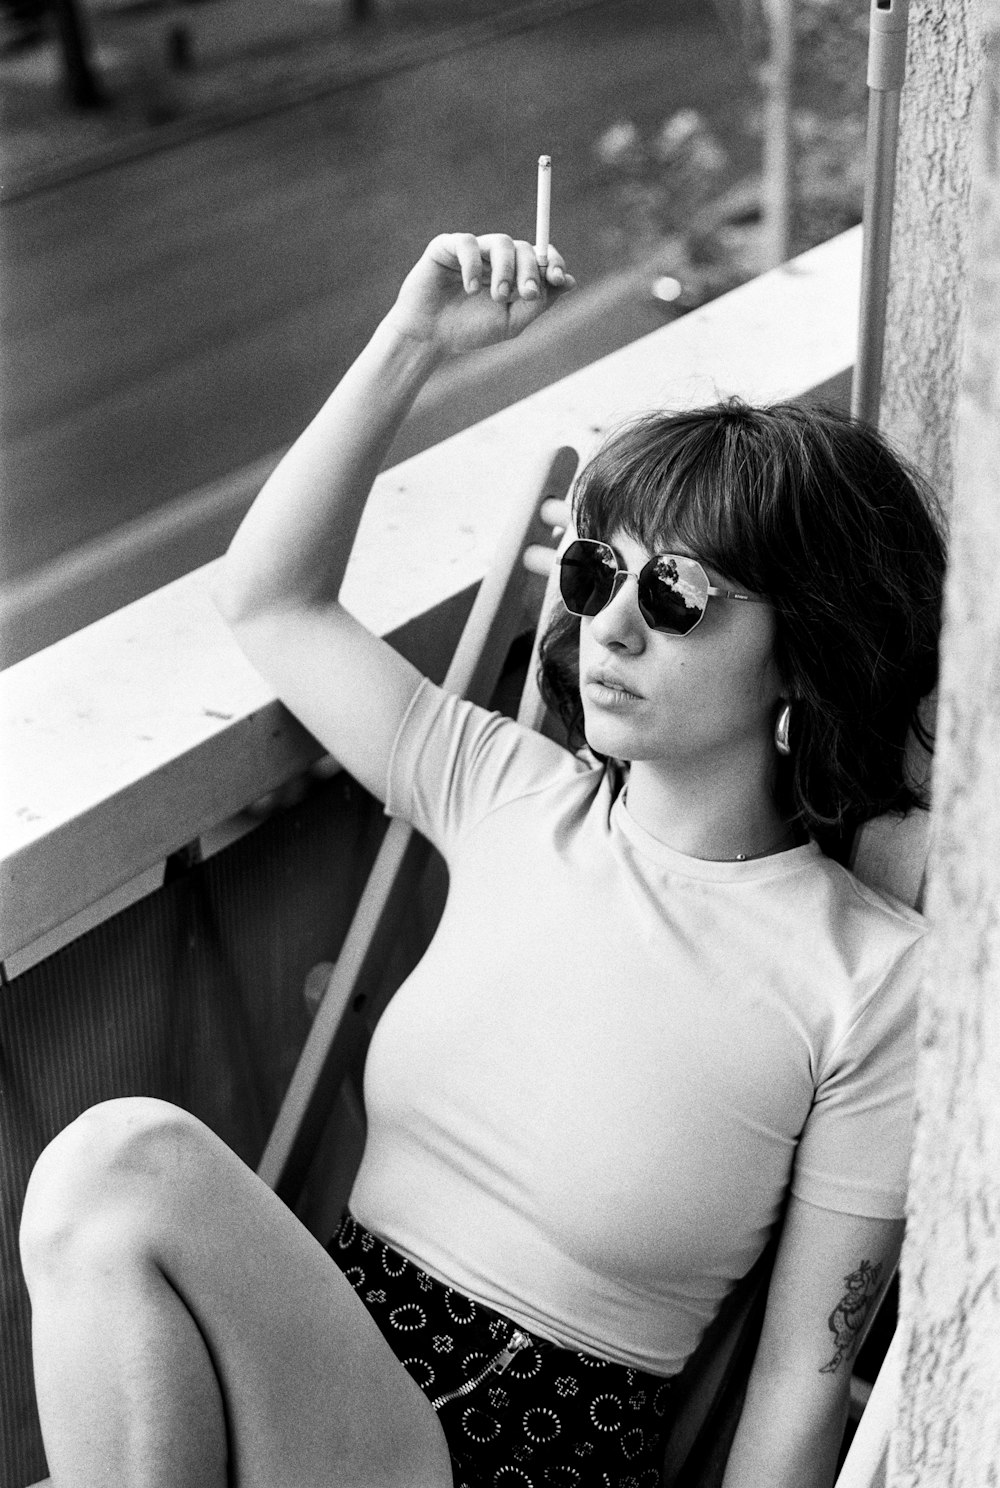 a woman sitting on a ledge smoking a cigarette